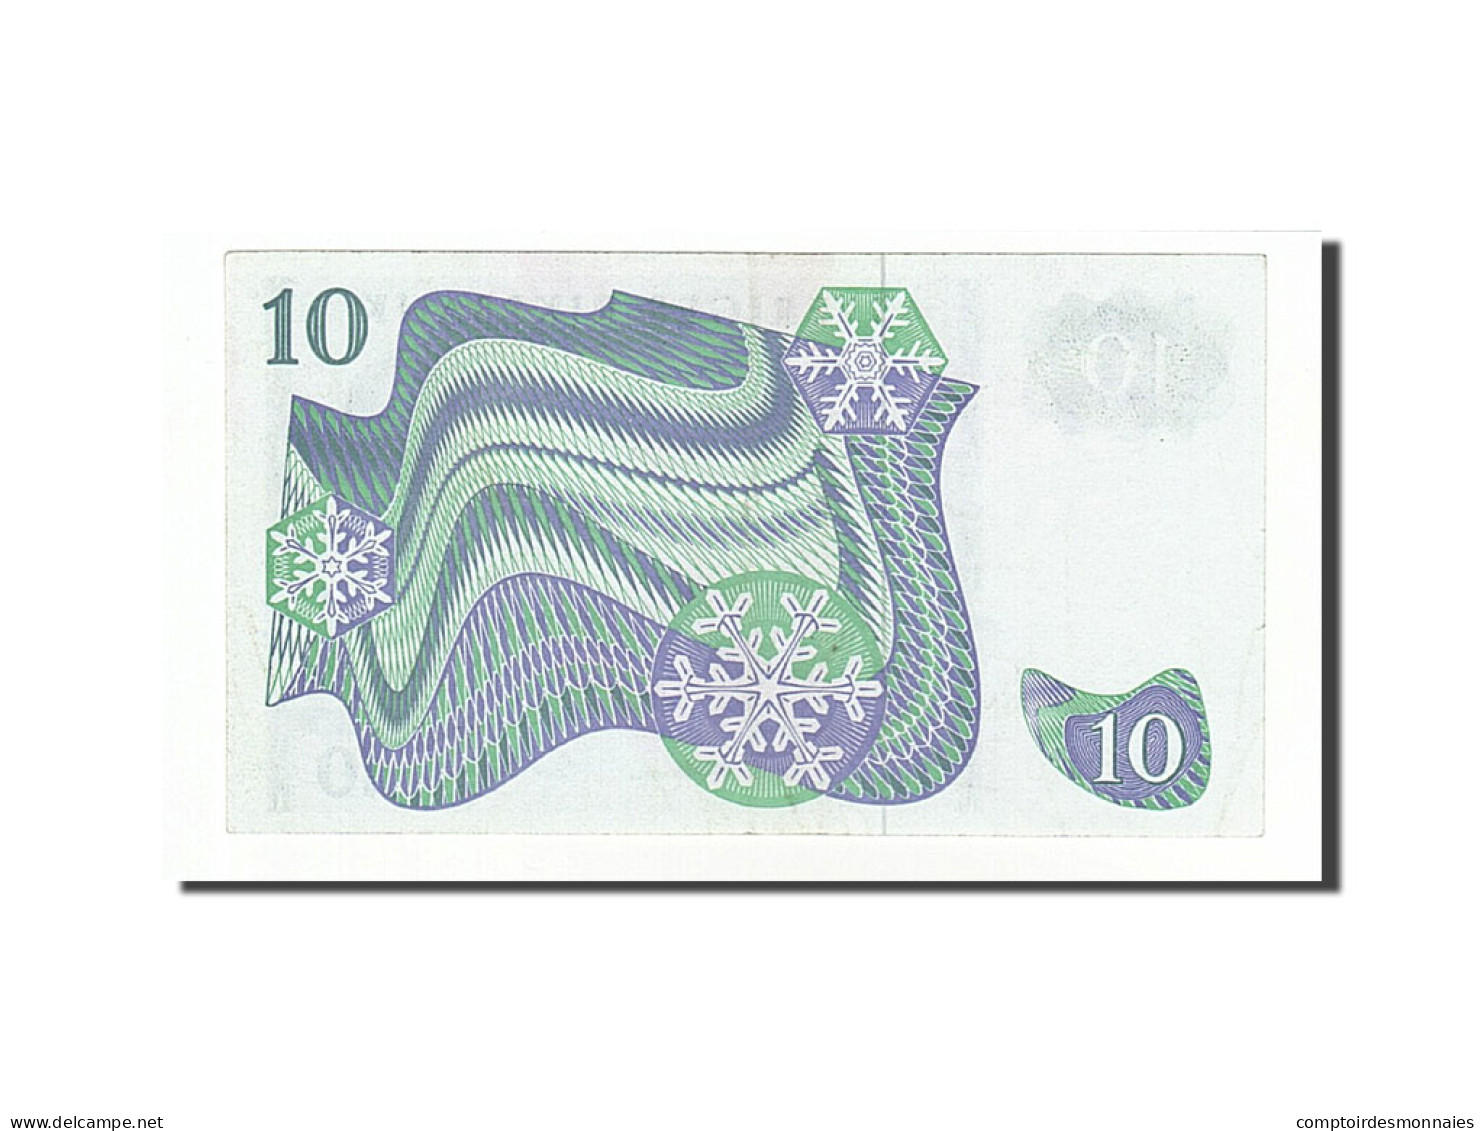 Billet, Suède, 10 Kronor, 1976, TTB+ - Sweden